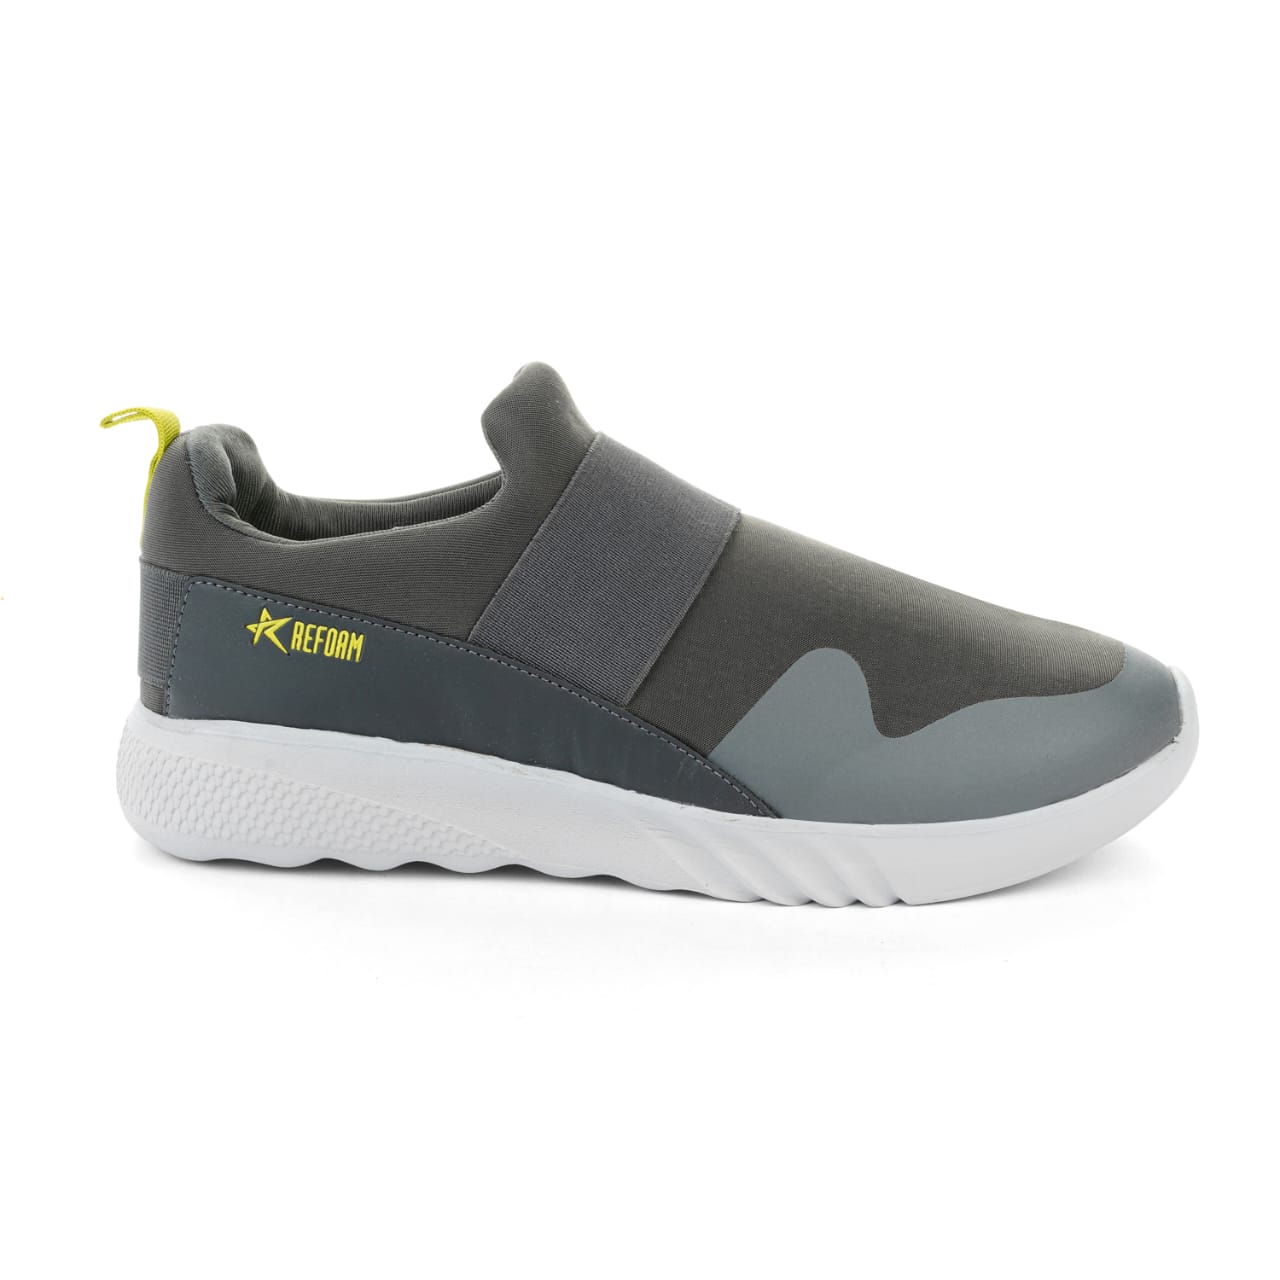 Grey Solid Textile Slip On Running Sport Shoes For Men